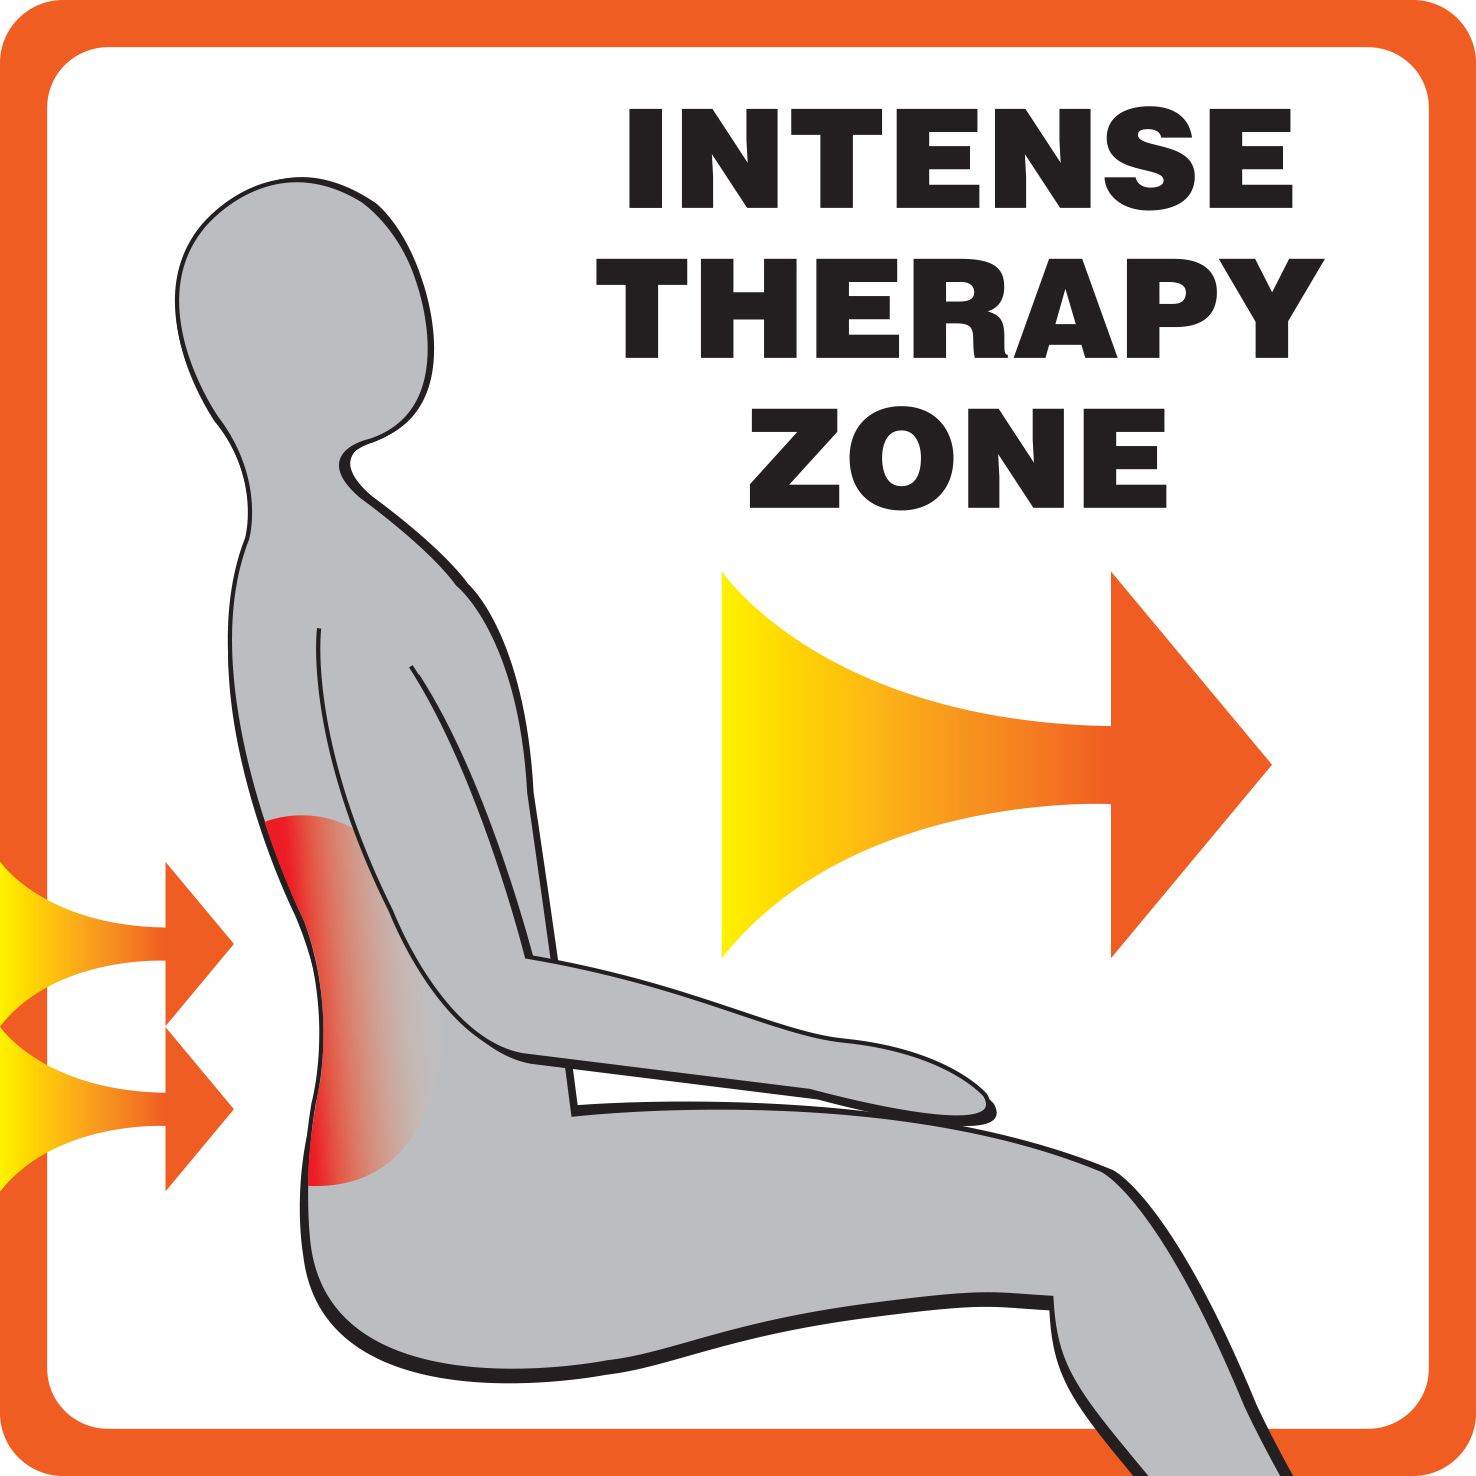 Intense Therapy Zone sticker